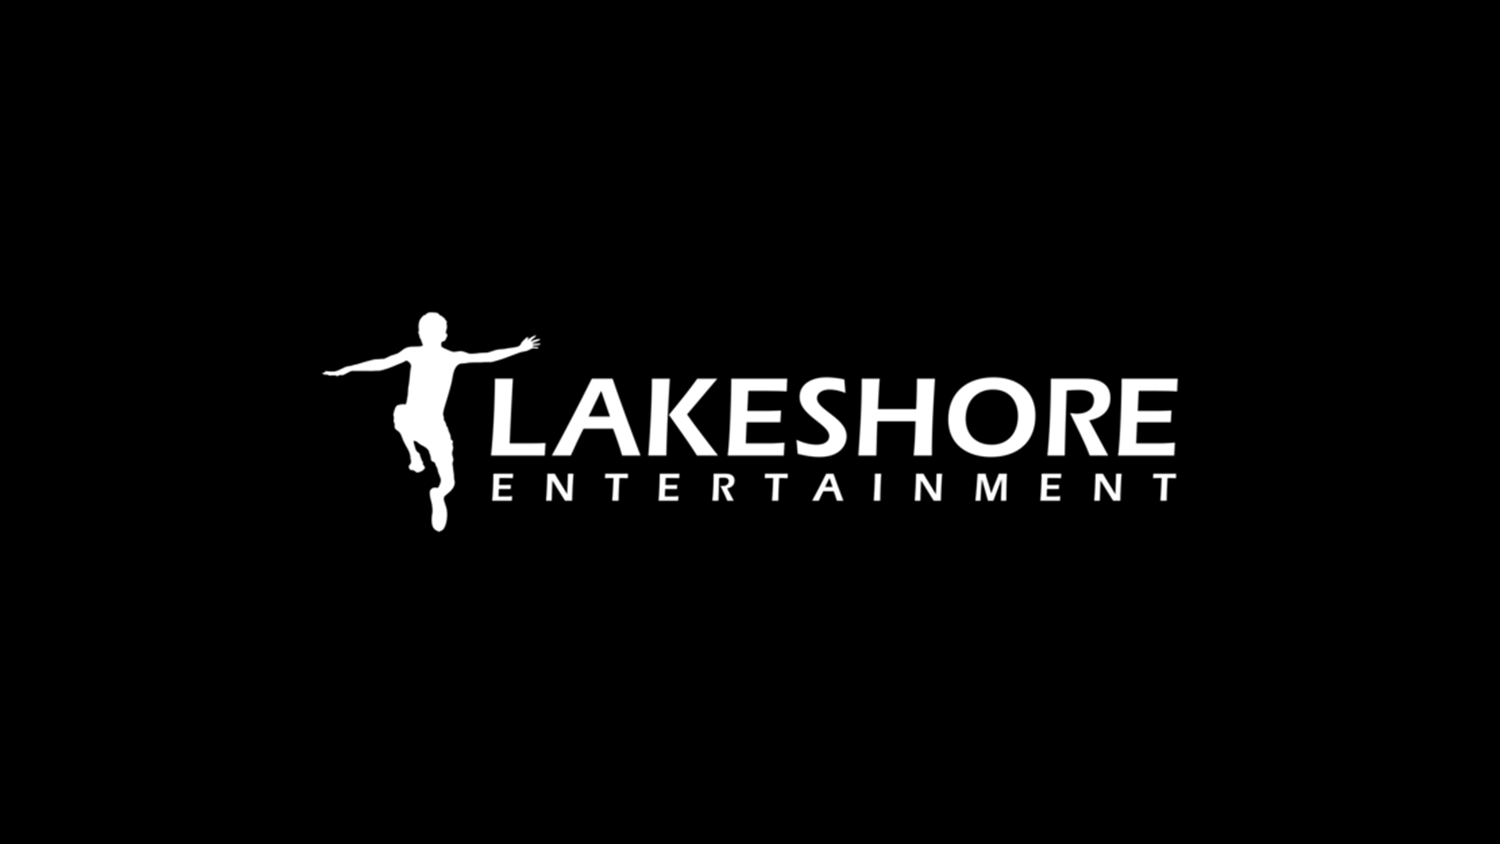 Lakeshore Entertainment Logo - Lakeshore Entertainment print logo.png. Fanmade Films 4